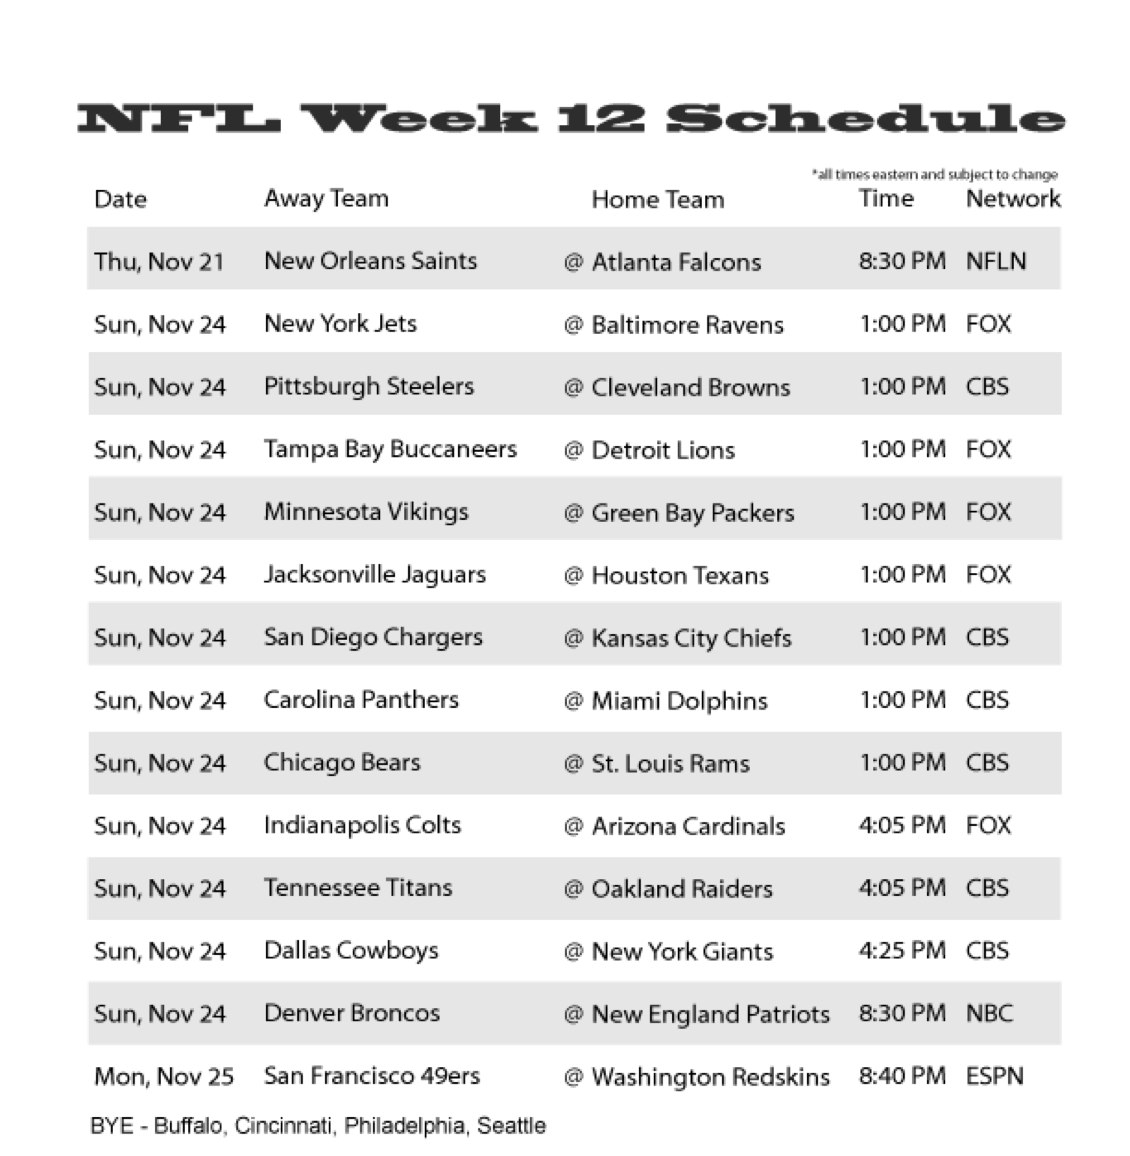 Nfl week 12 schedule 2013